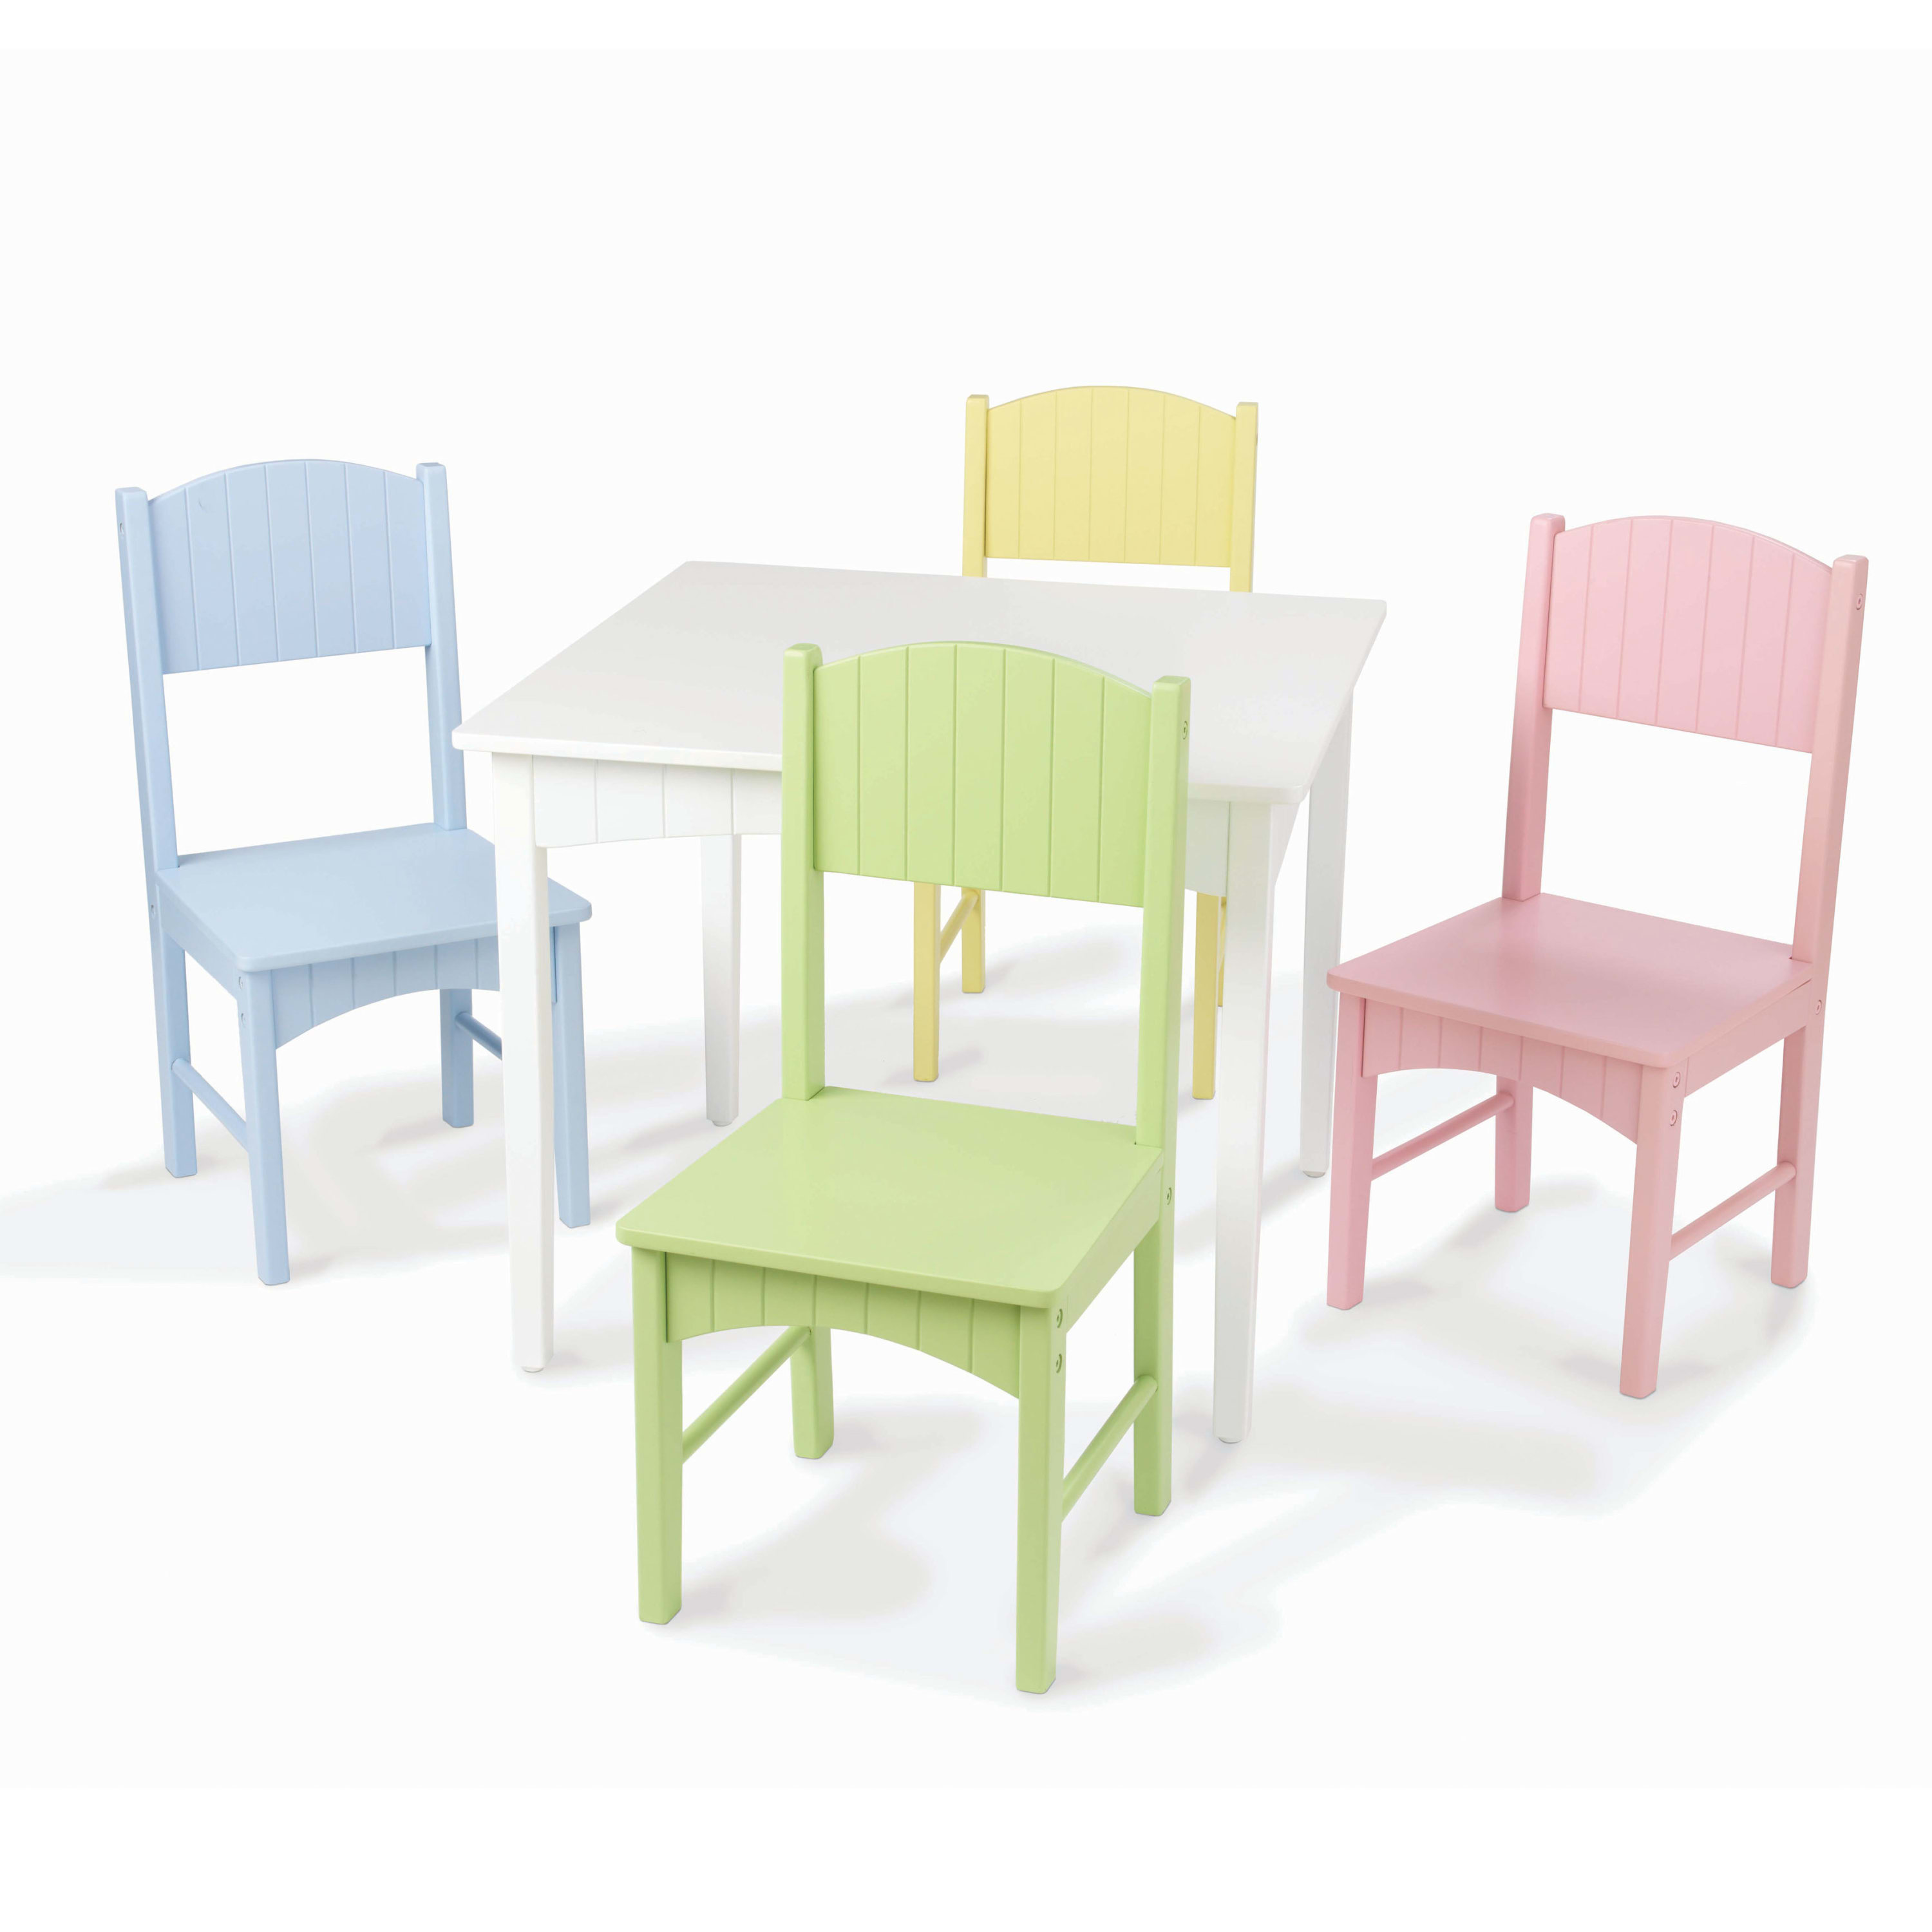 KidKraft Nantucket Children's Wooden Table & 4 Chair Set, Pastel Colors - image 1 of 9